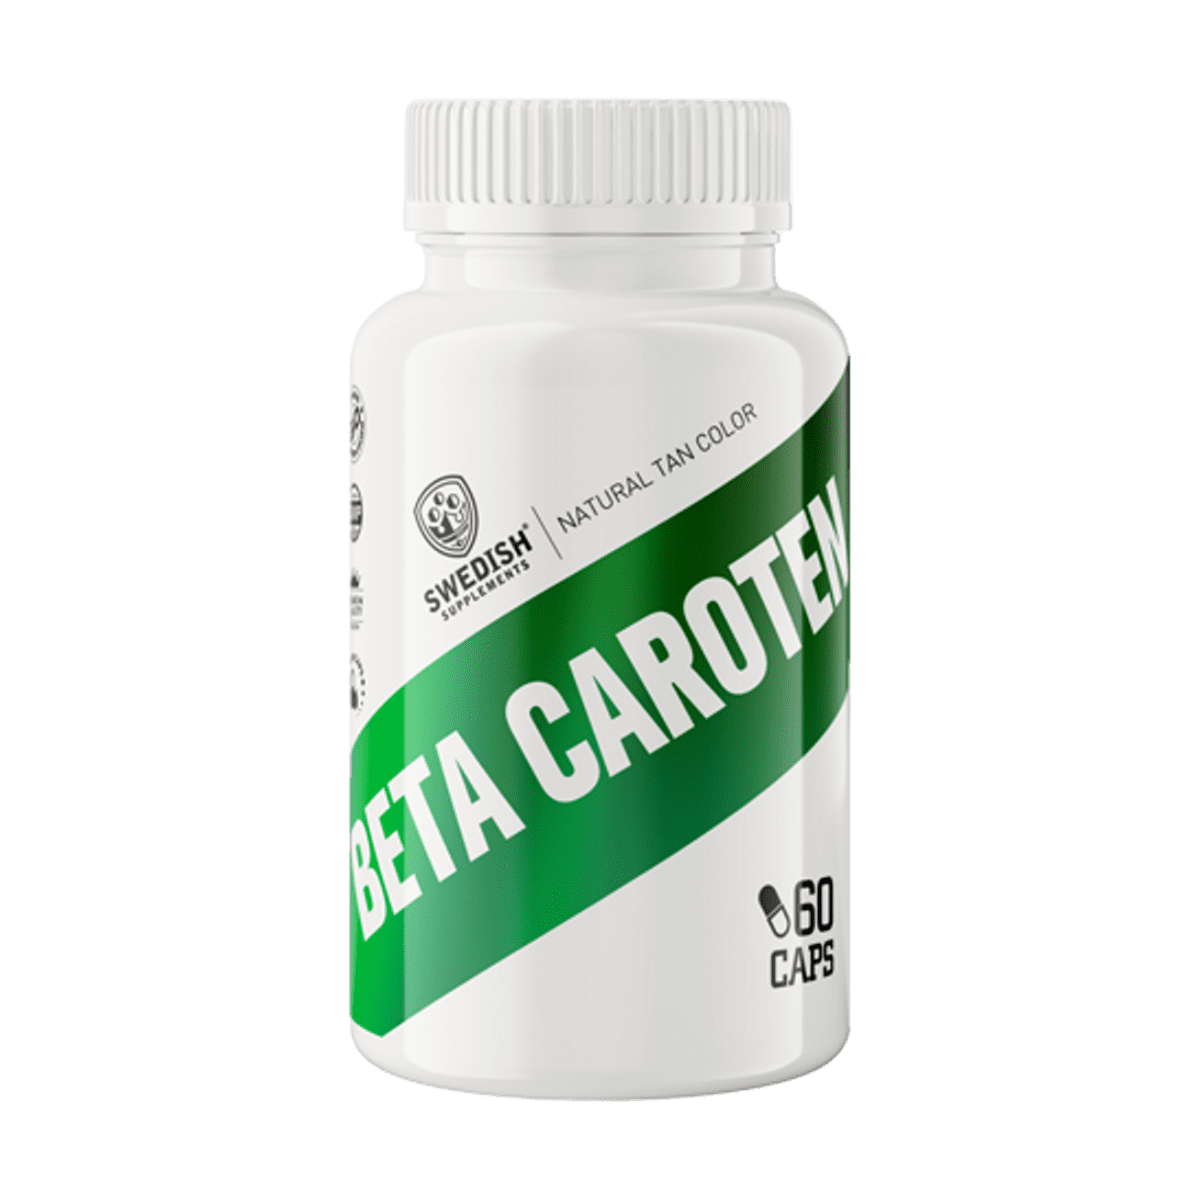 Swedish Supplements Beta Caroten, 60 Caps -  |  Richbeauty